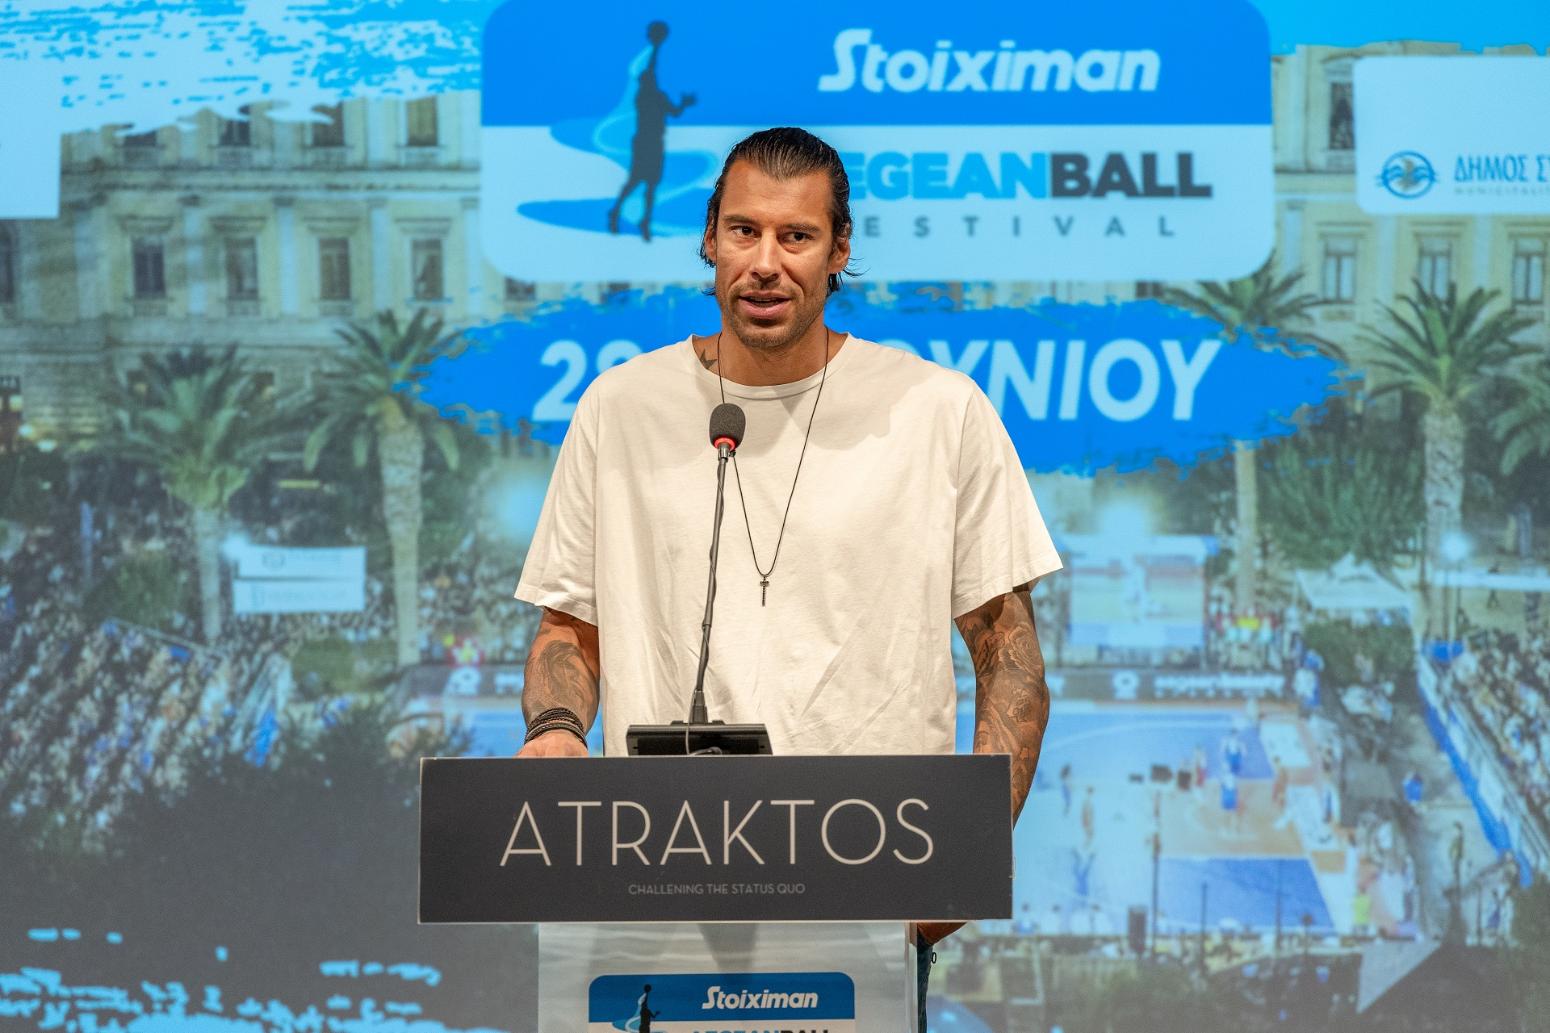 Stoiximan AegeanBall Festival: Η μεγαλύτερη γιορτή του 3x3 μπάσκετ για 6η χρονιά